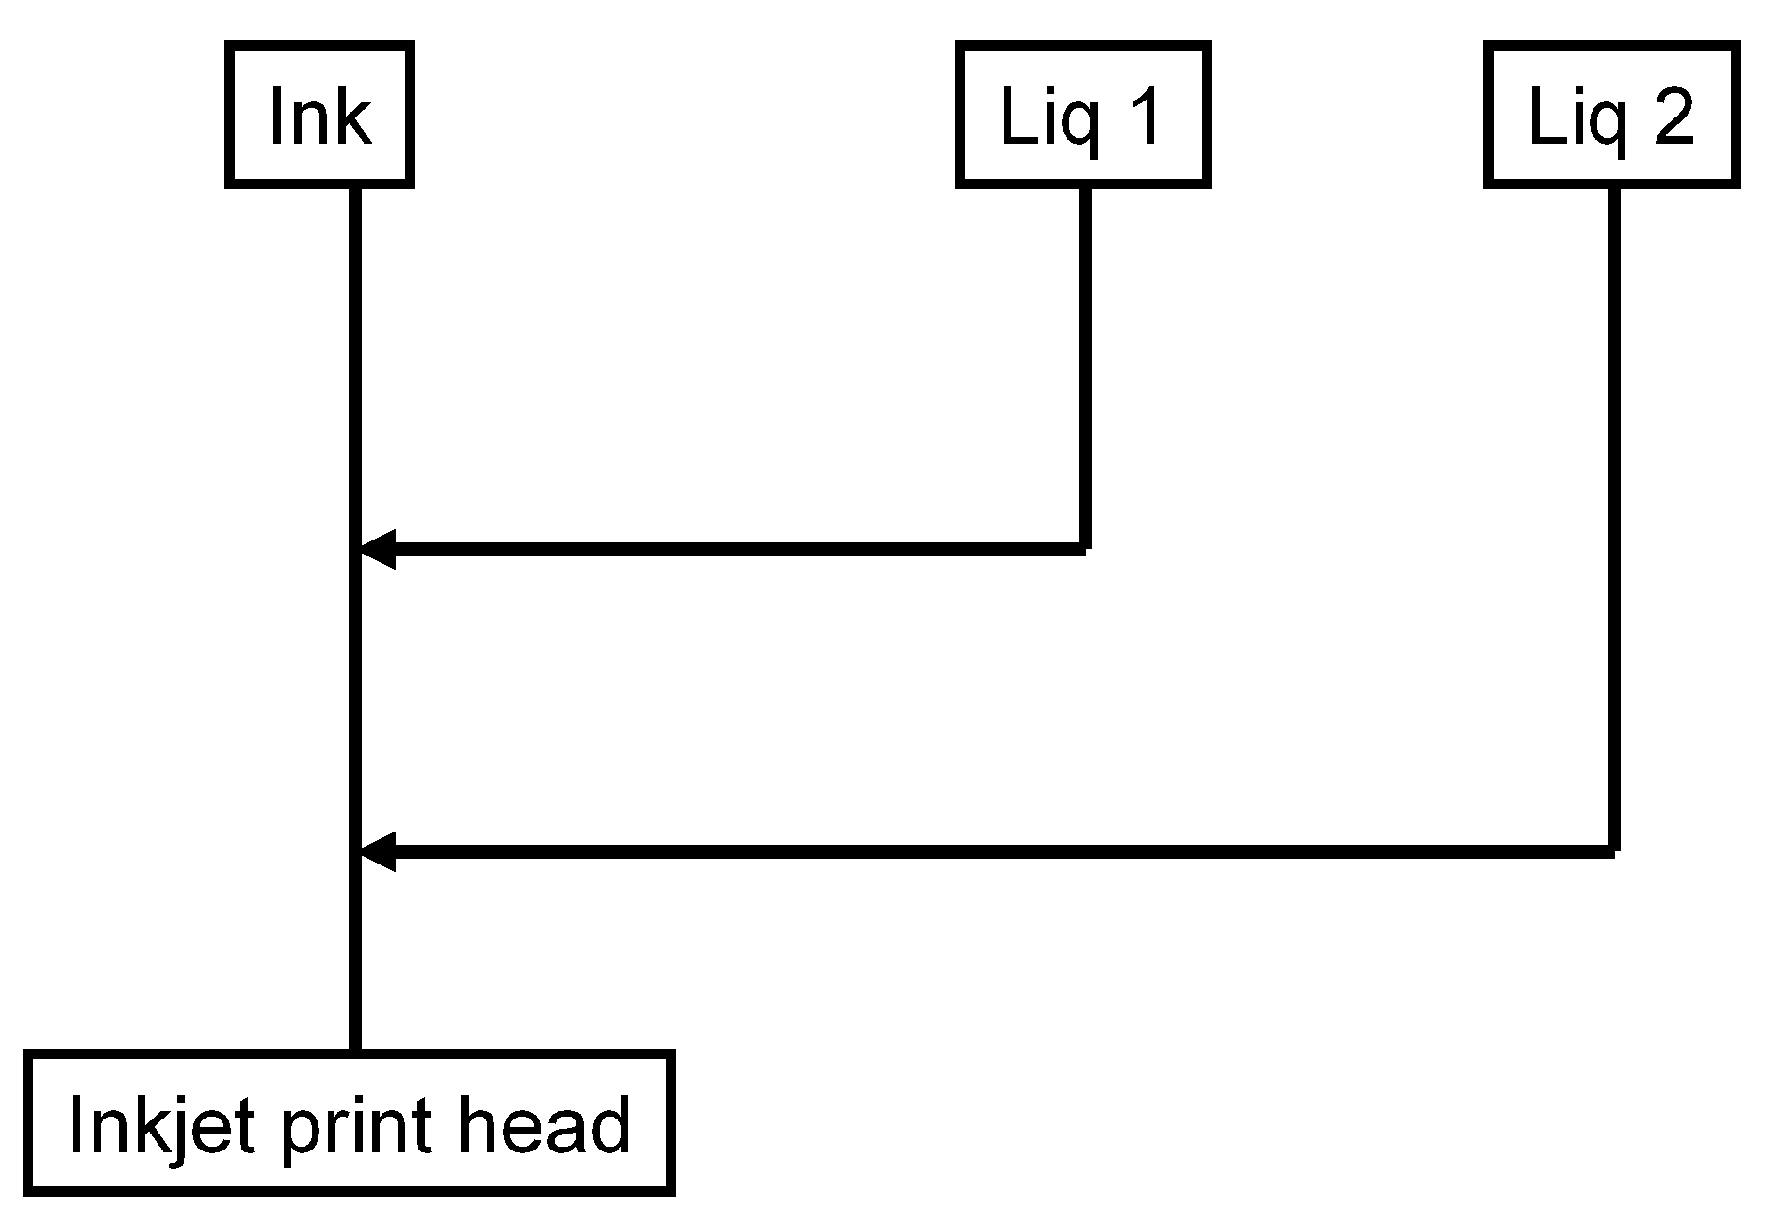 Inkjet printing methods and ink sets